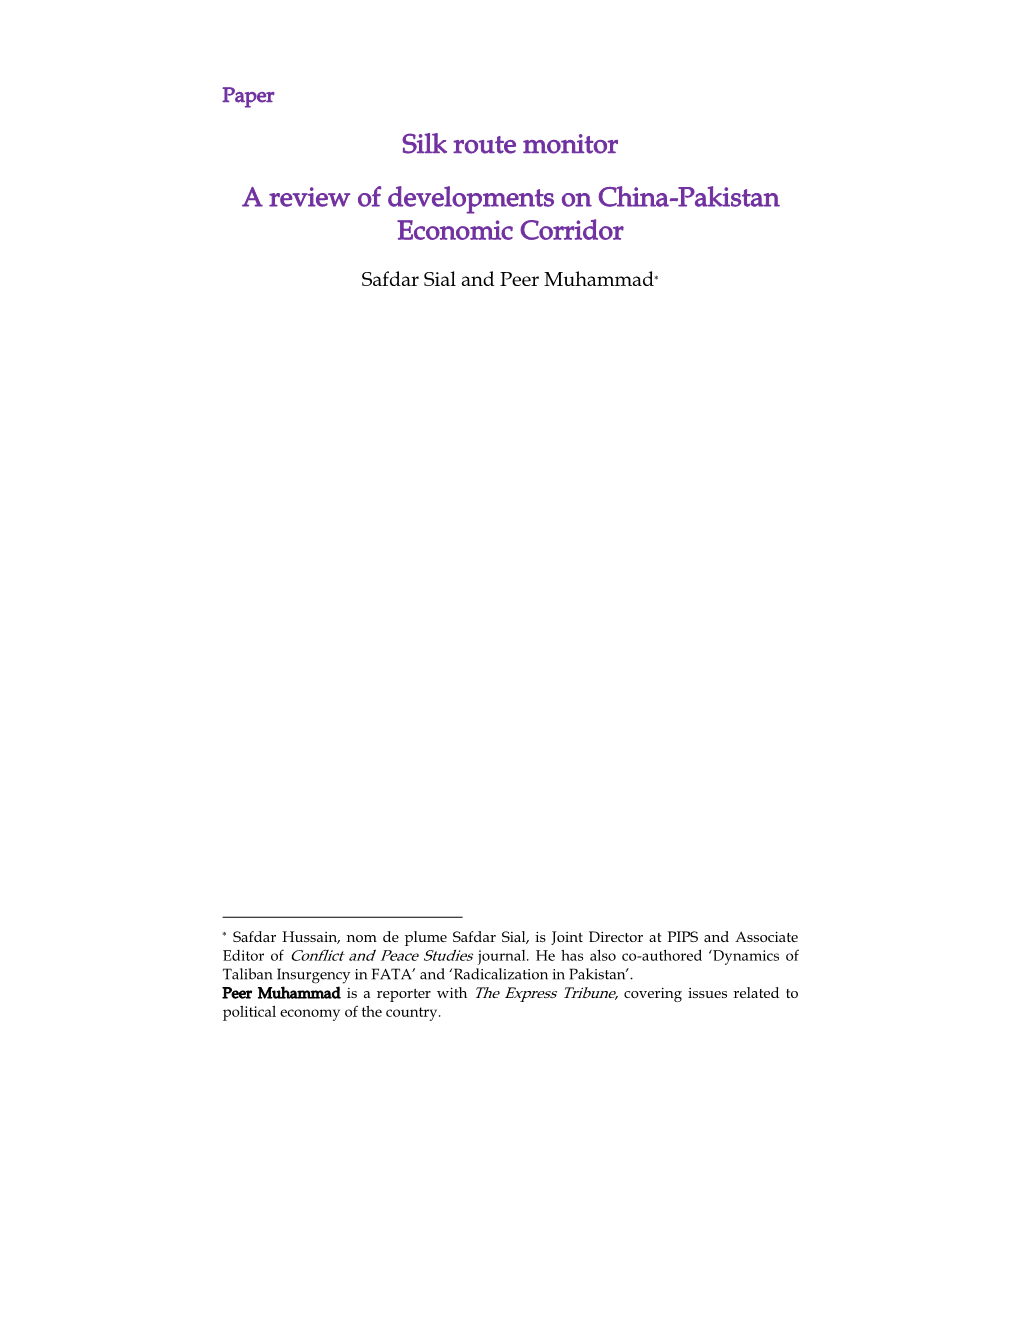 Silk Route Monitor a Review of Developments on China-Pakistan Economic Corridor